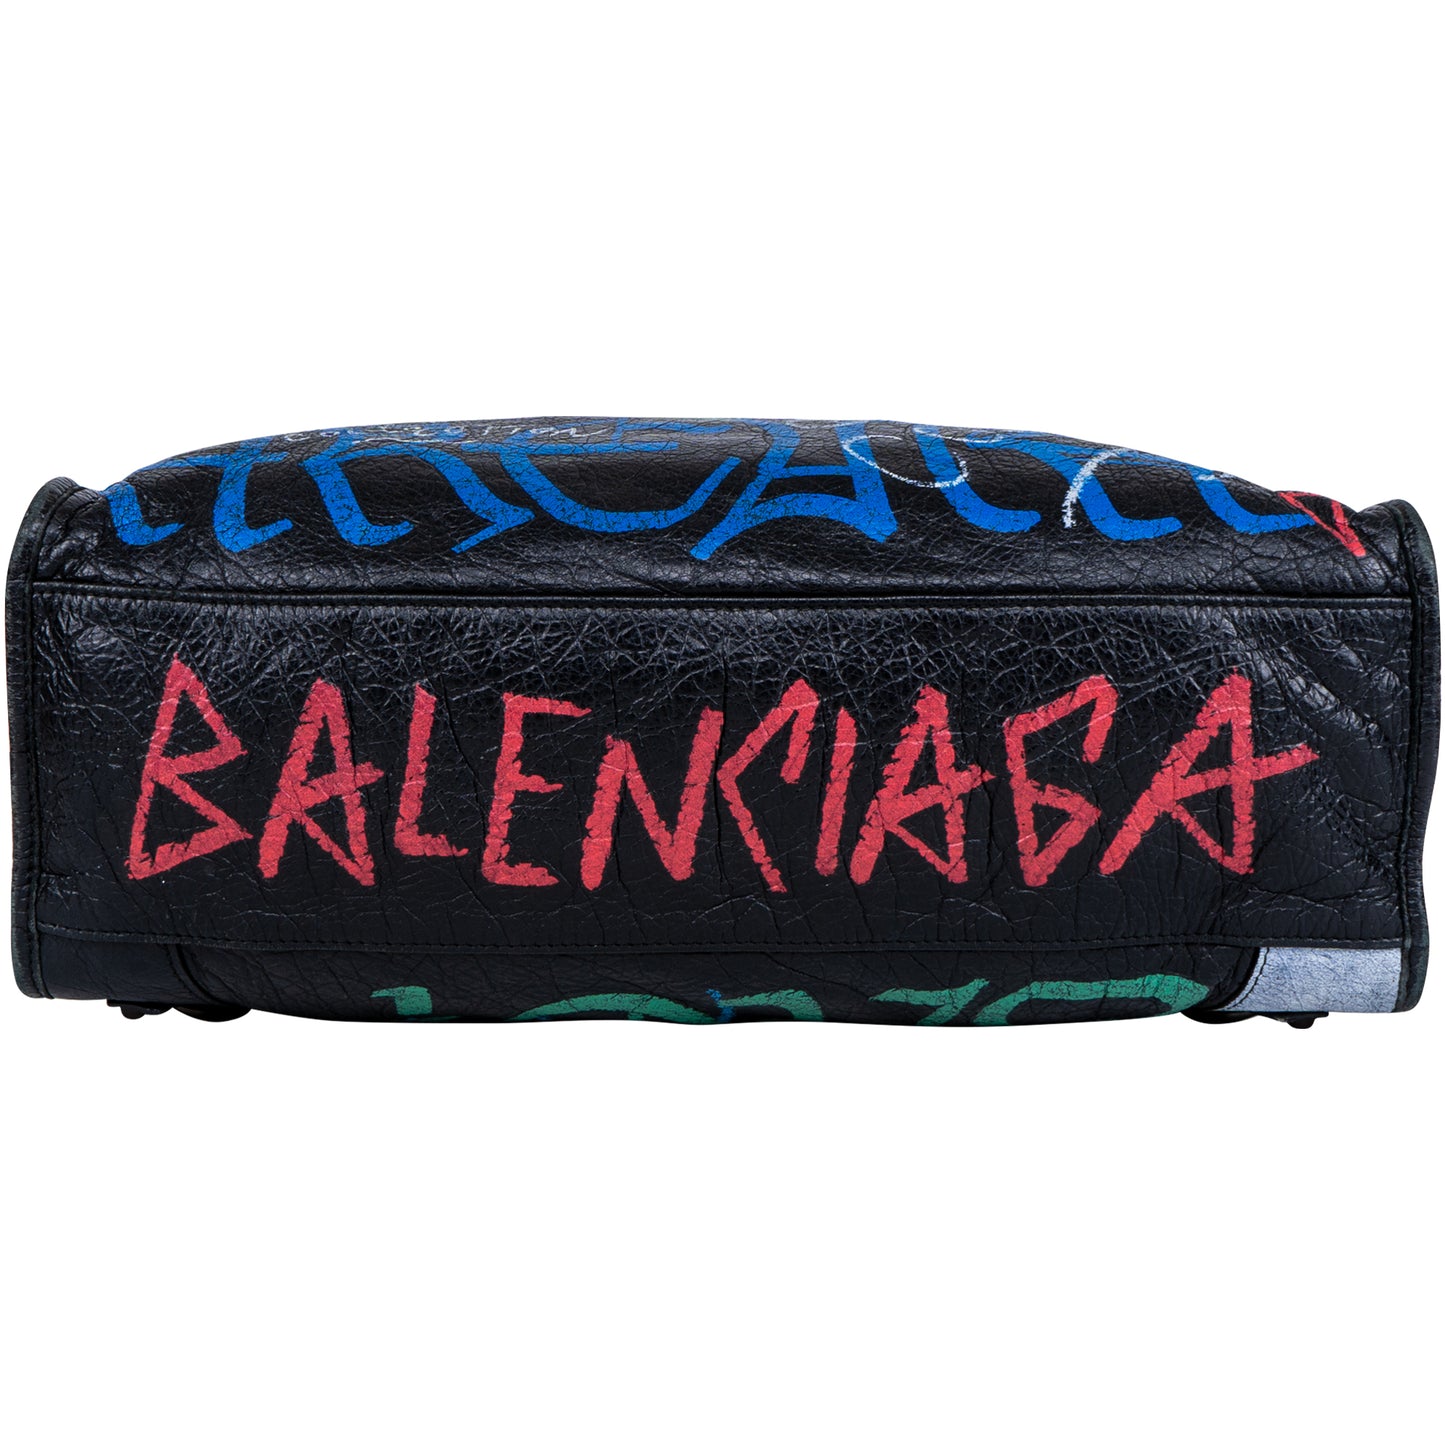 Balenciaga Black Graffiti City Bag